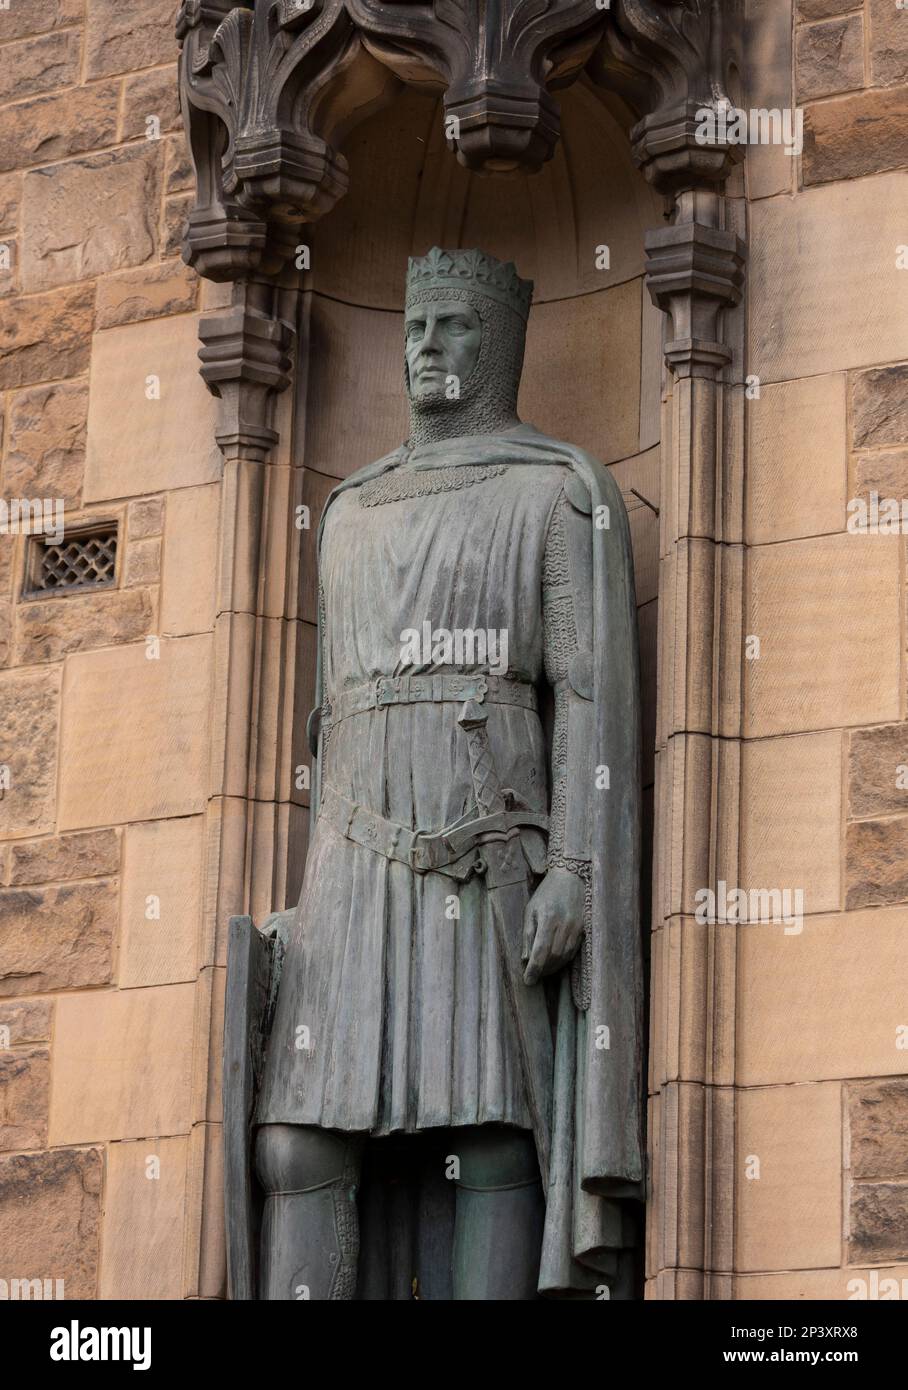 EDINBURGH, SCOTLAND, EUROPE - Statue of Robert the Bruce, King of Scots, at the entrance to Edinburgh Castle. Sculptor Thomas Clapperton. Stock Photo